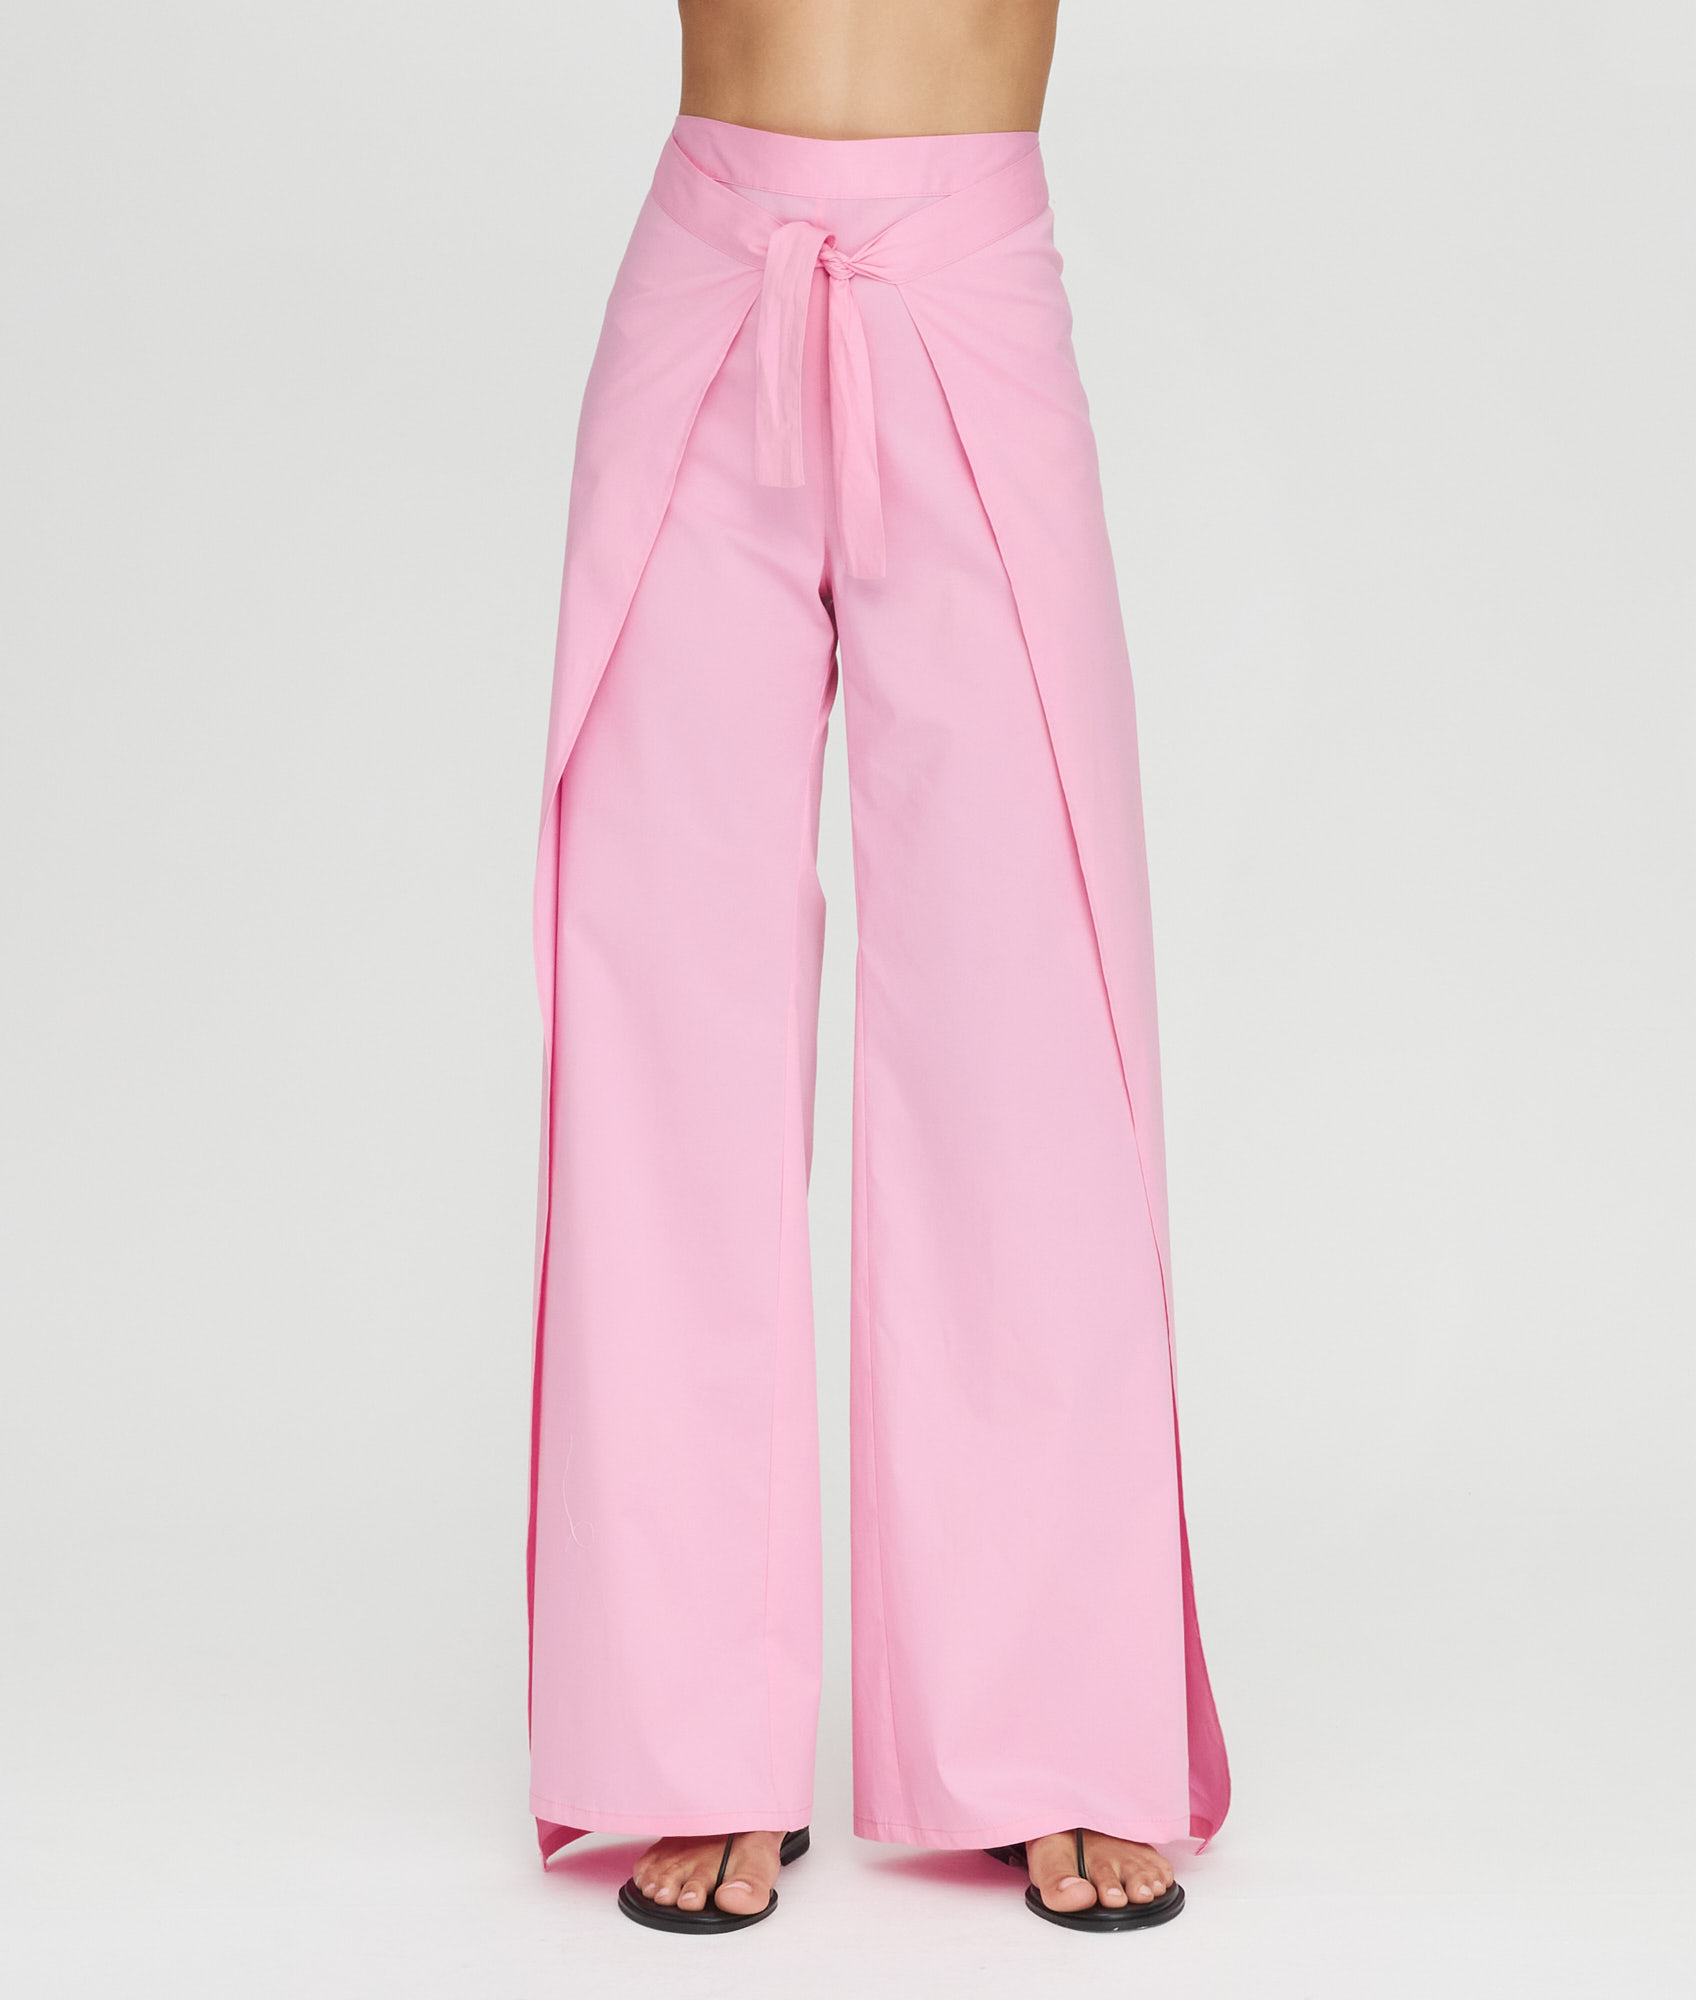 Naomi Baby Pink Pants